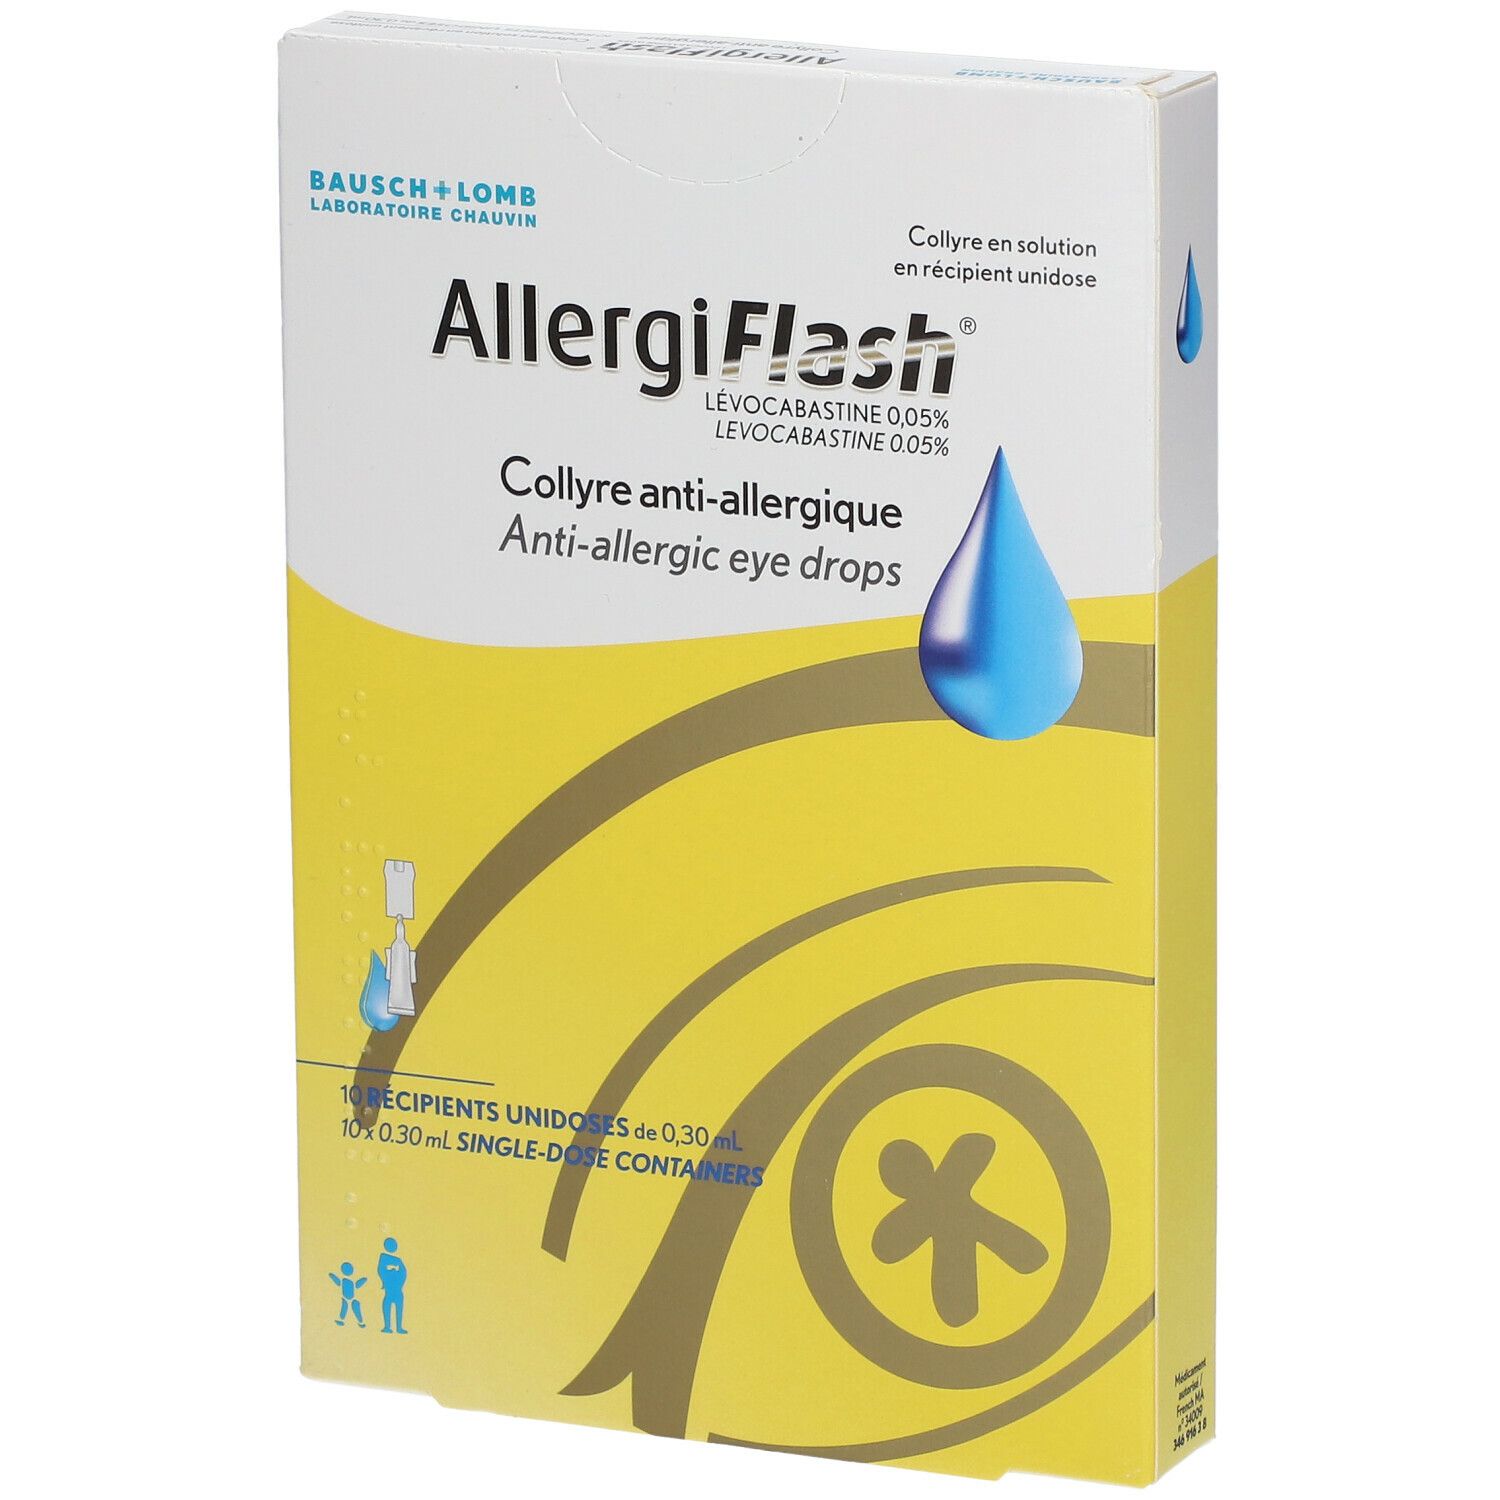 Medicament Allergie - Antihistaminique : Achat En Ligne Pas Cher ...